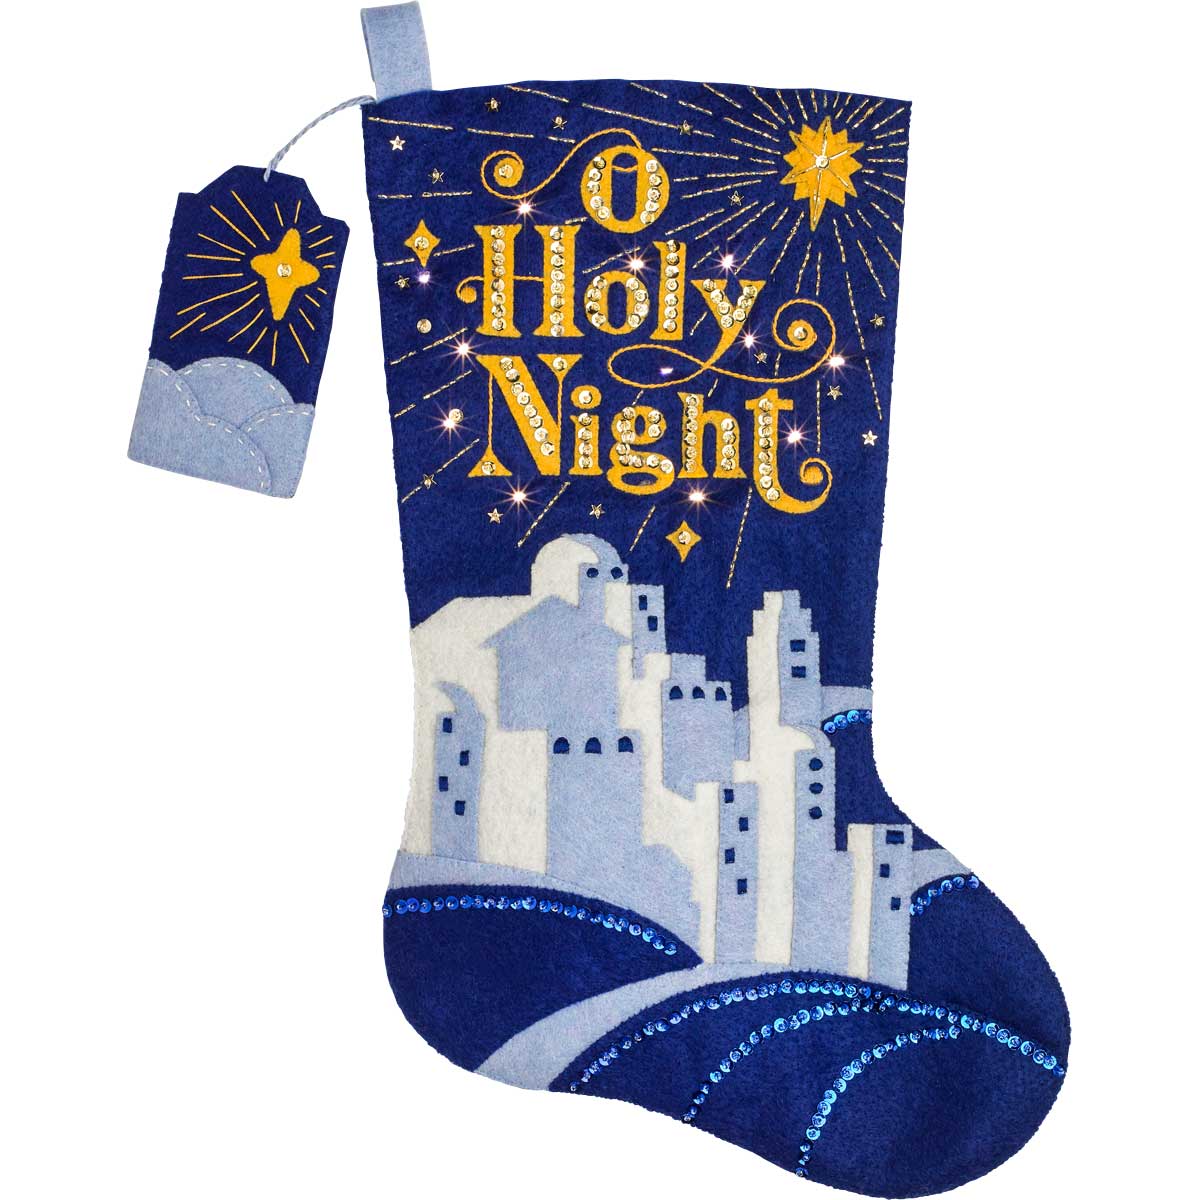 Bucilla ® Seasonal - Felt - Stocking Kits - DaySpring - O Holy Night with Lights - 86888E